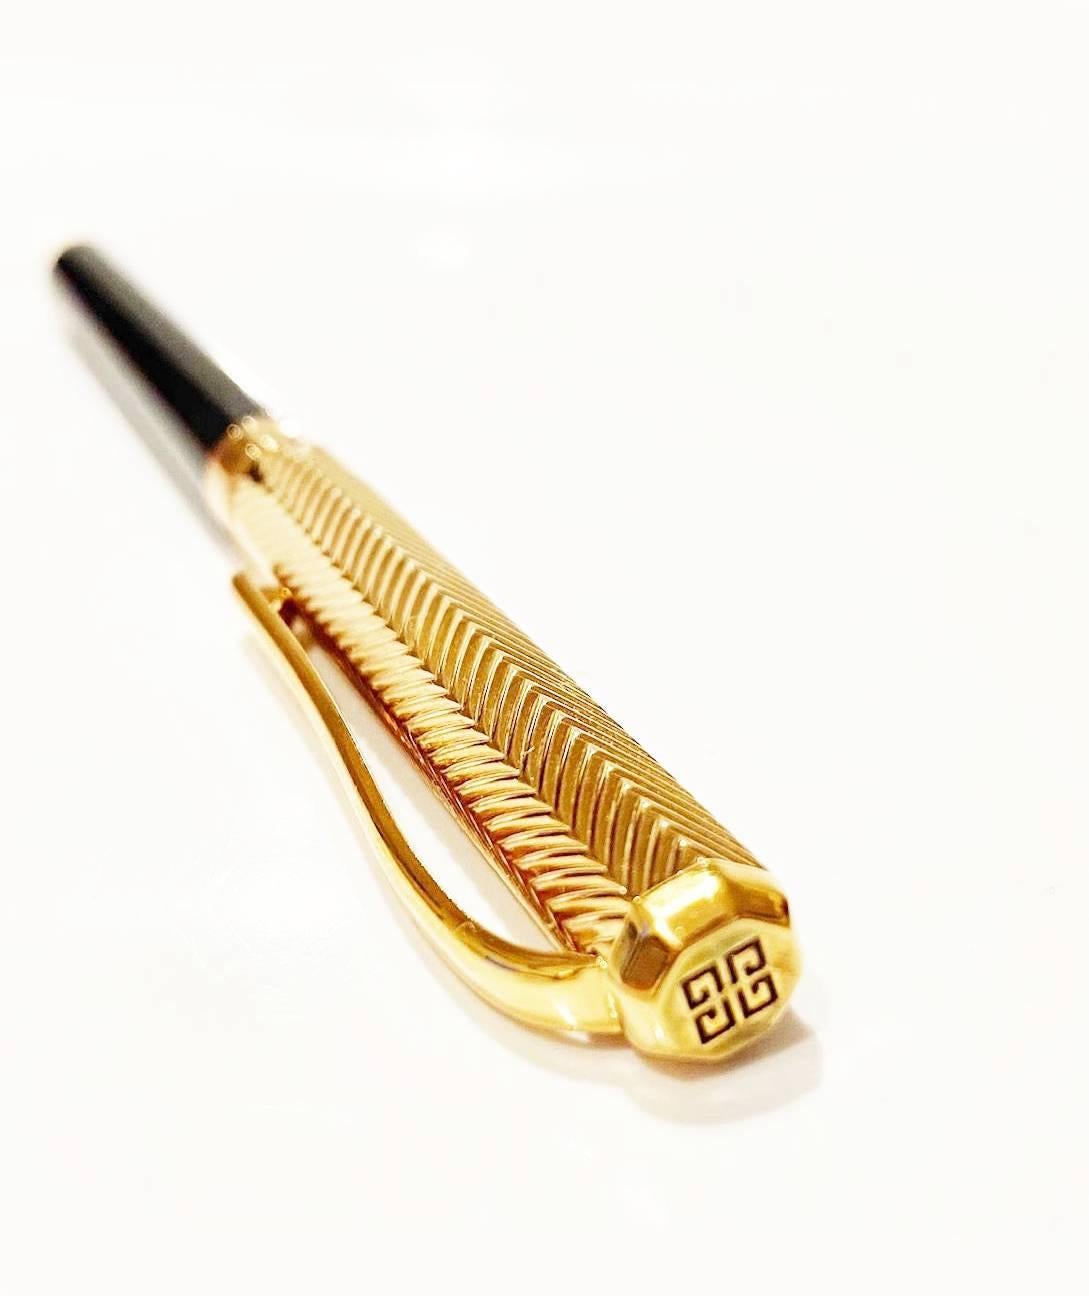 Givenchy ballpoint pen, gold coloured top, twist to open pen, logo on top, logo engraved

Condition: 1980s, very good 